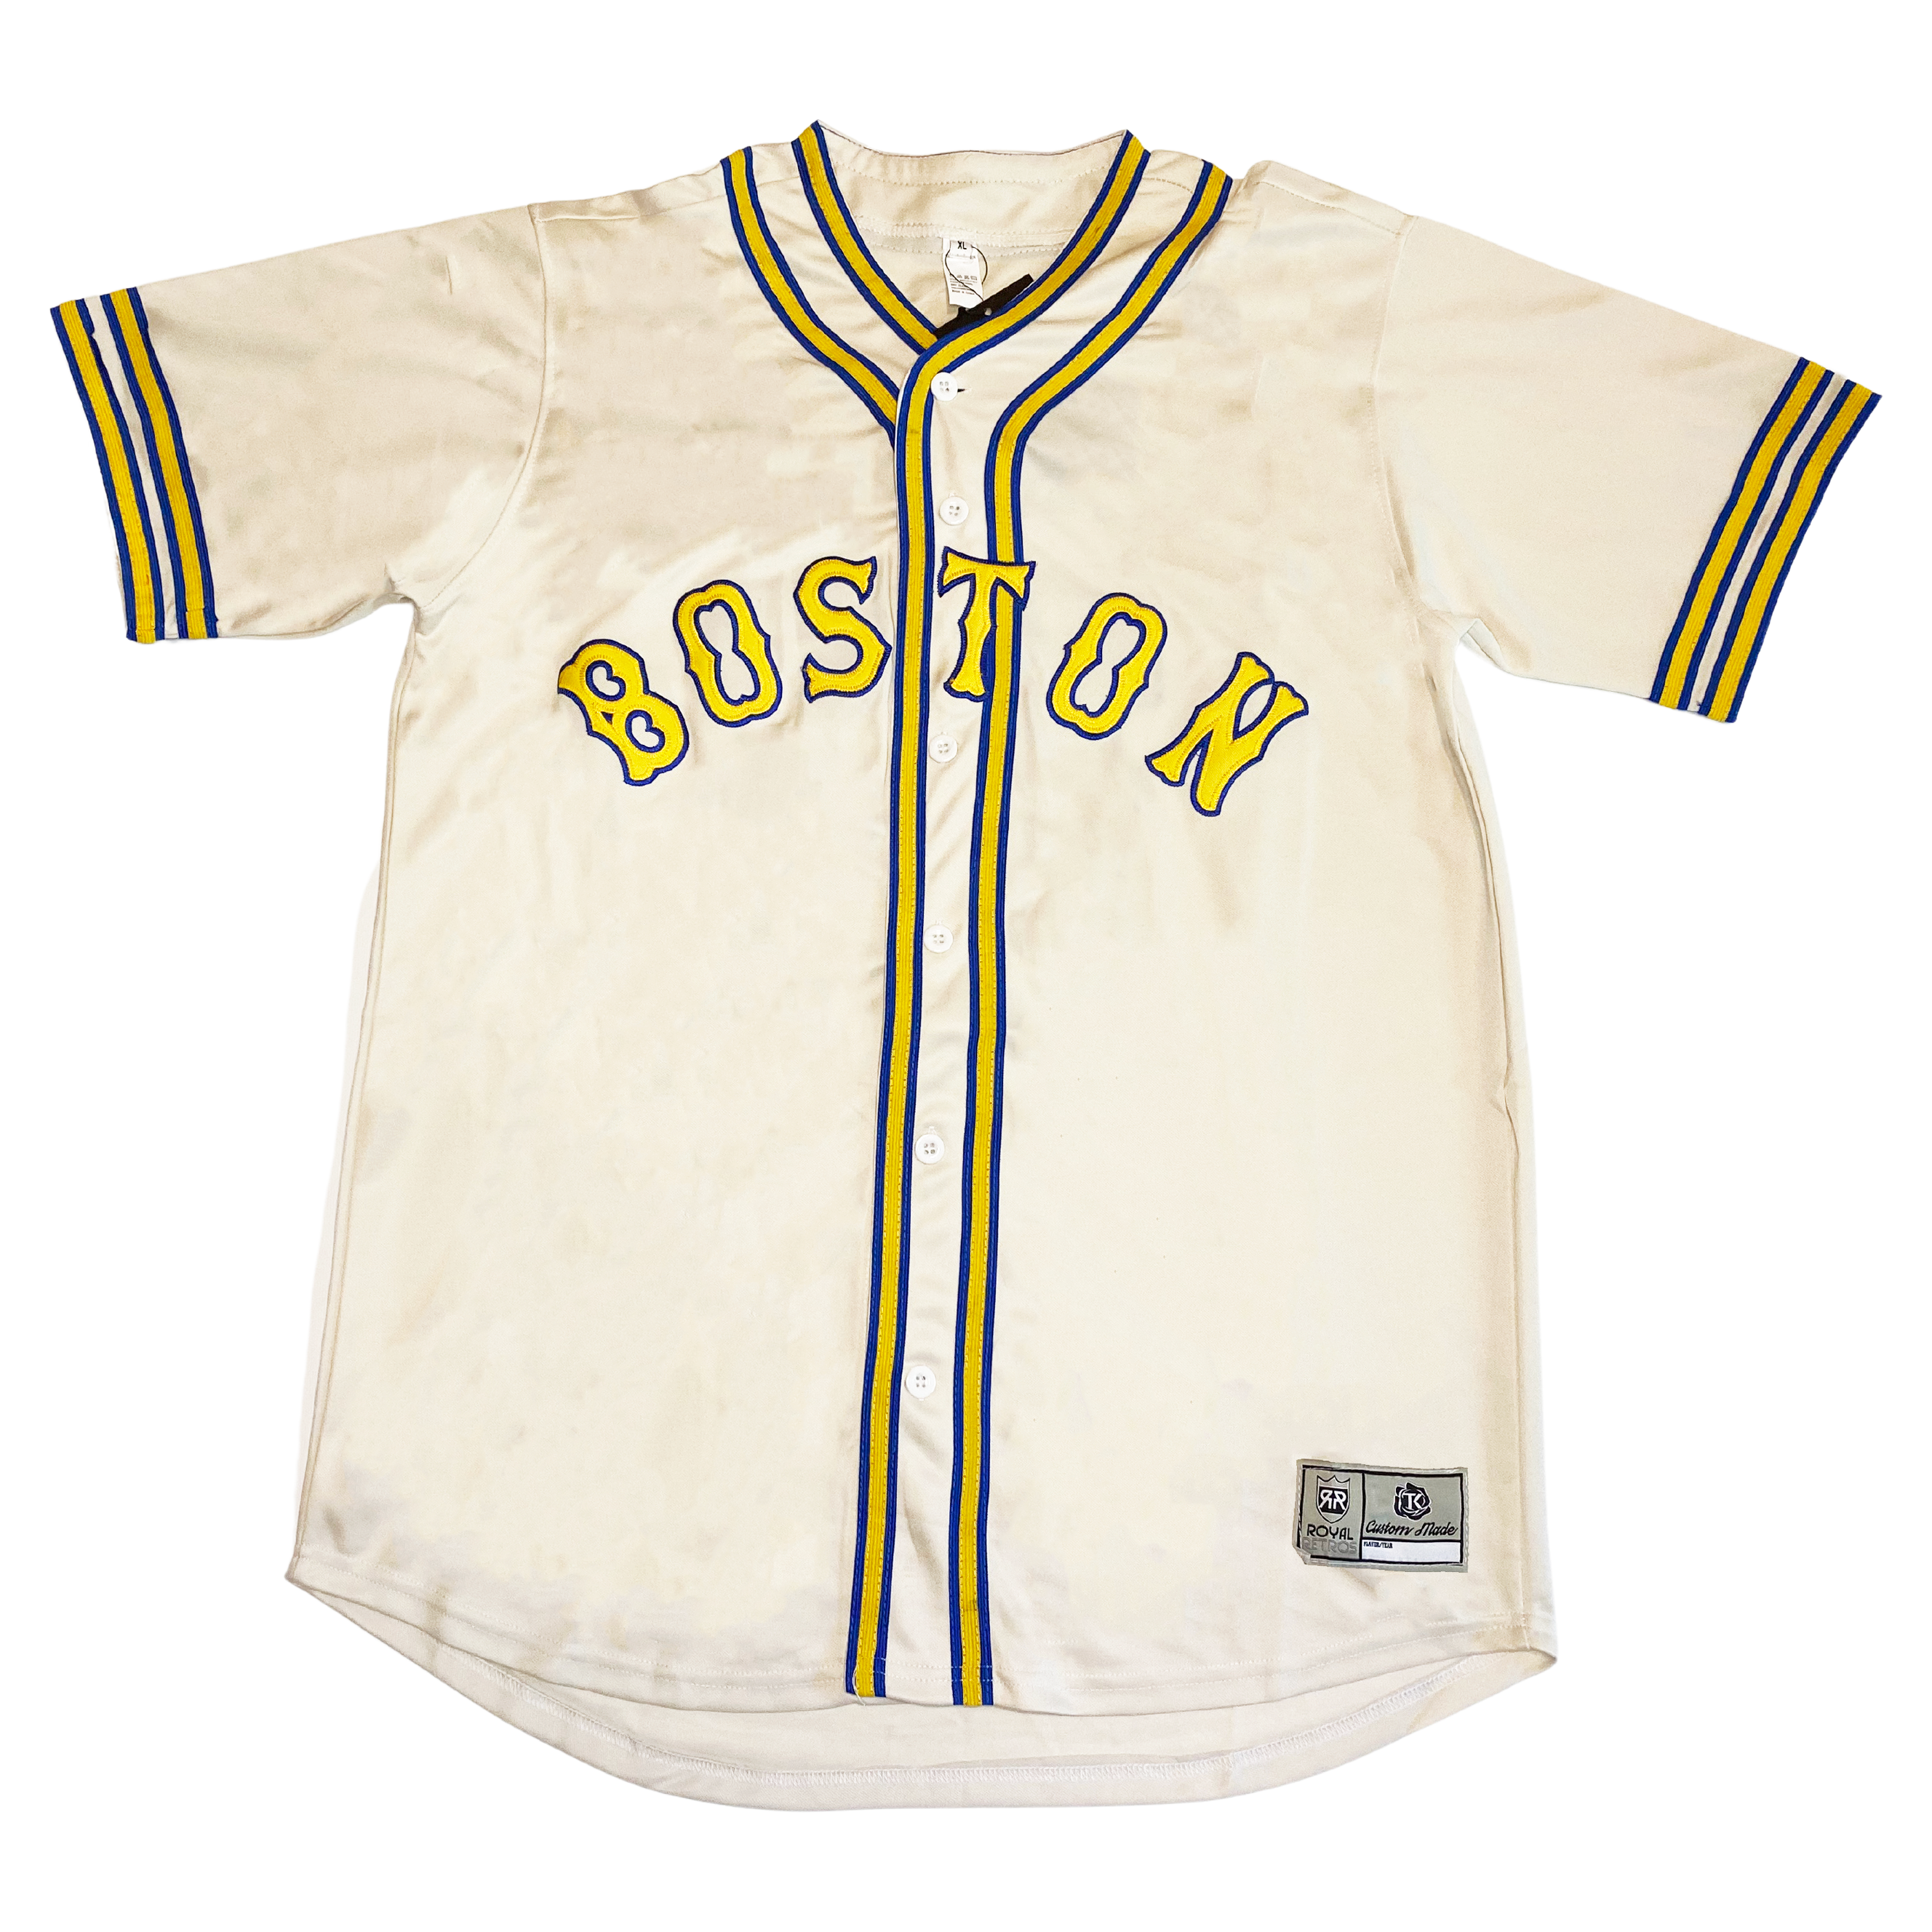 boston baseball uniform today